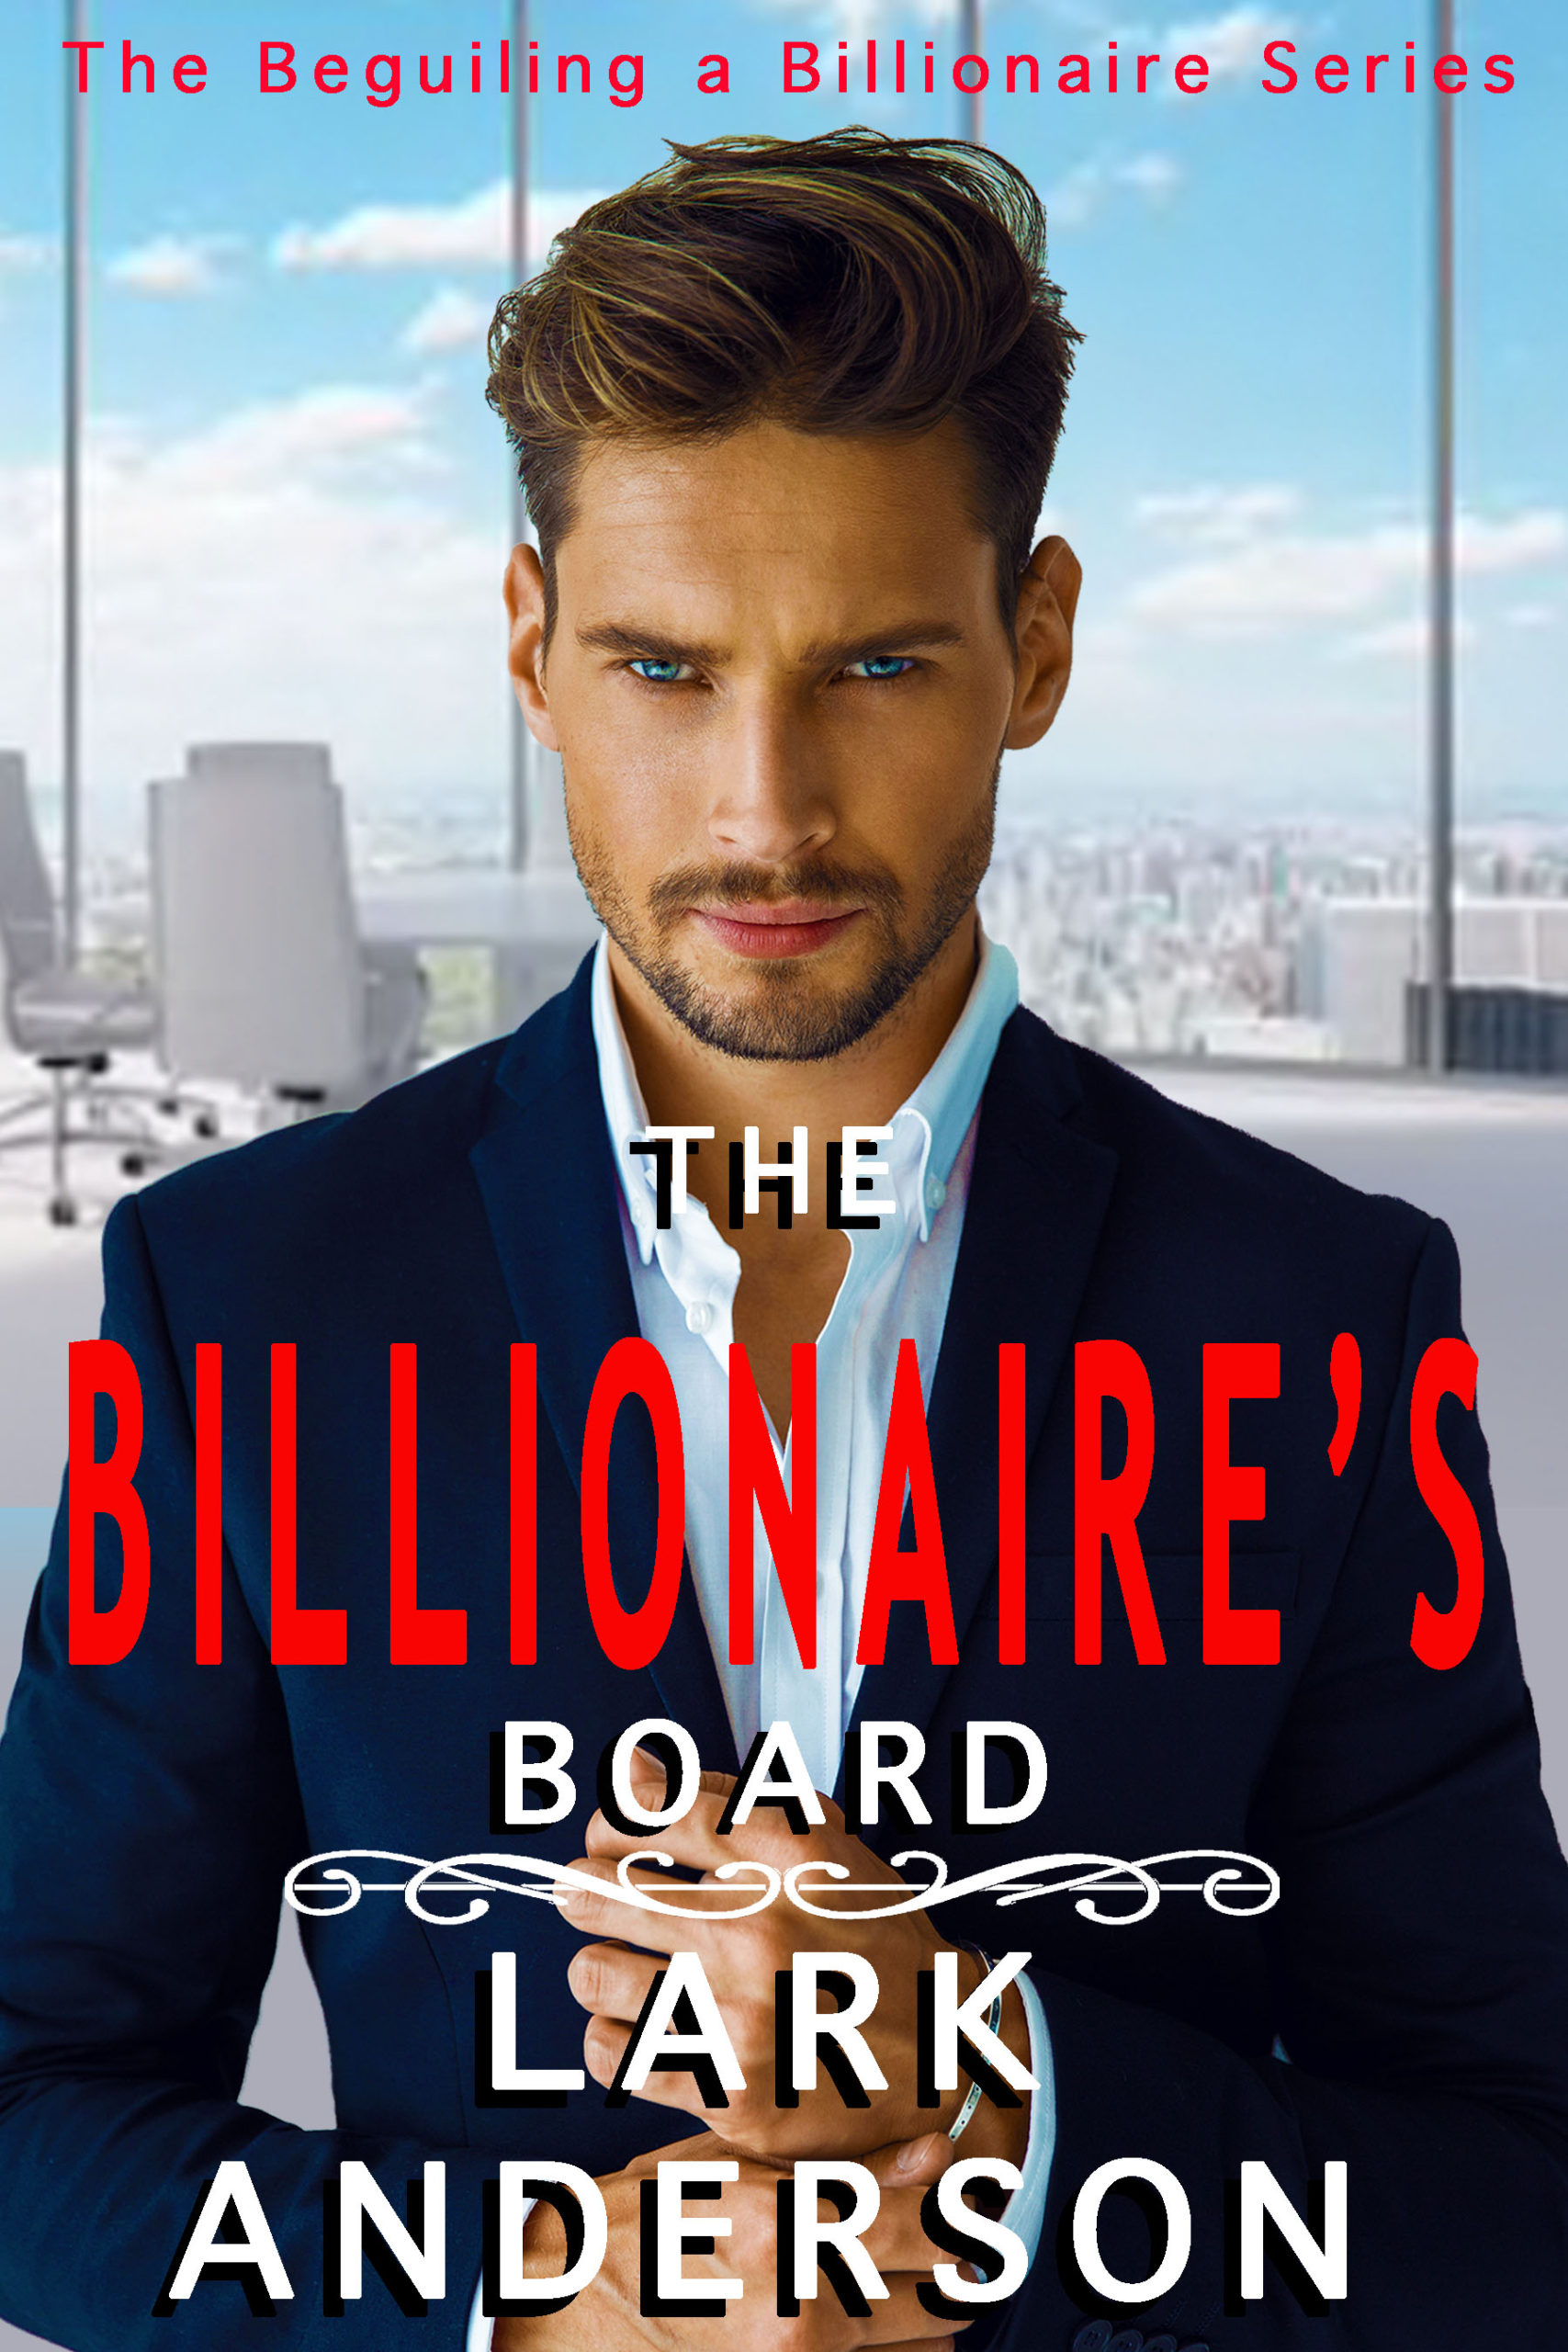 The Billionaire’s Board by Lark Anderson